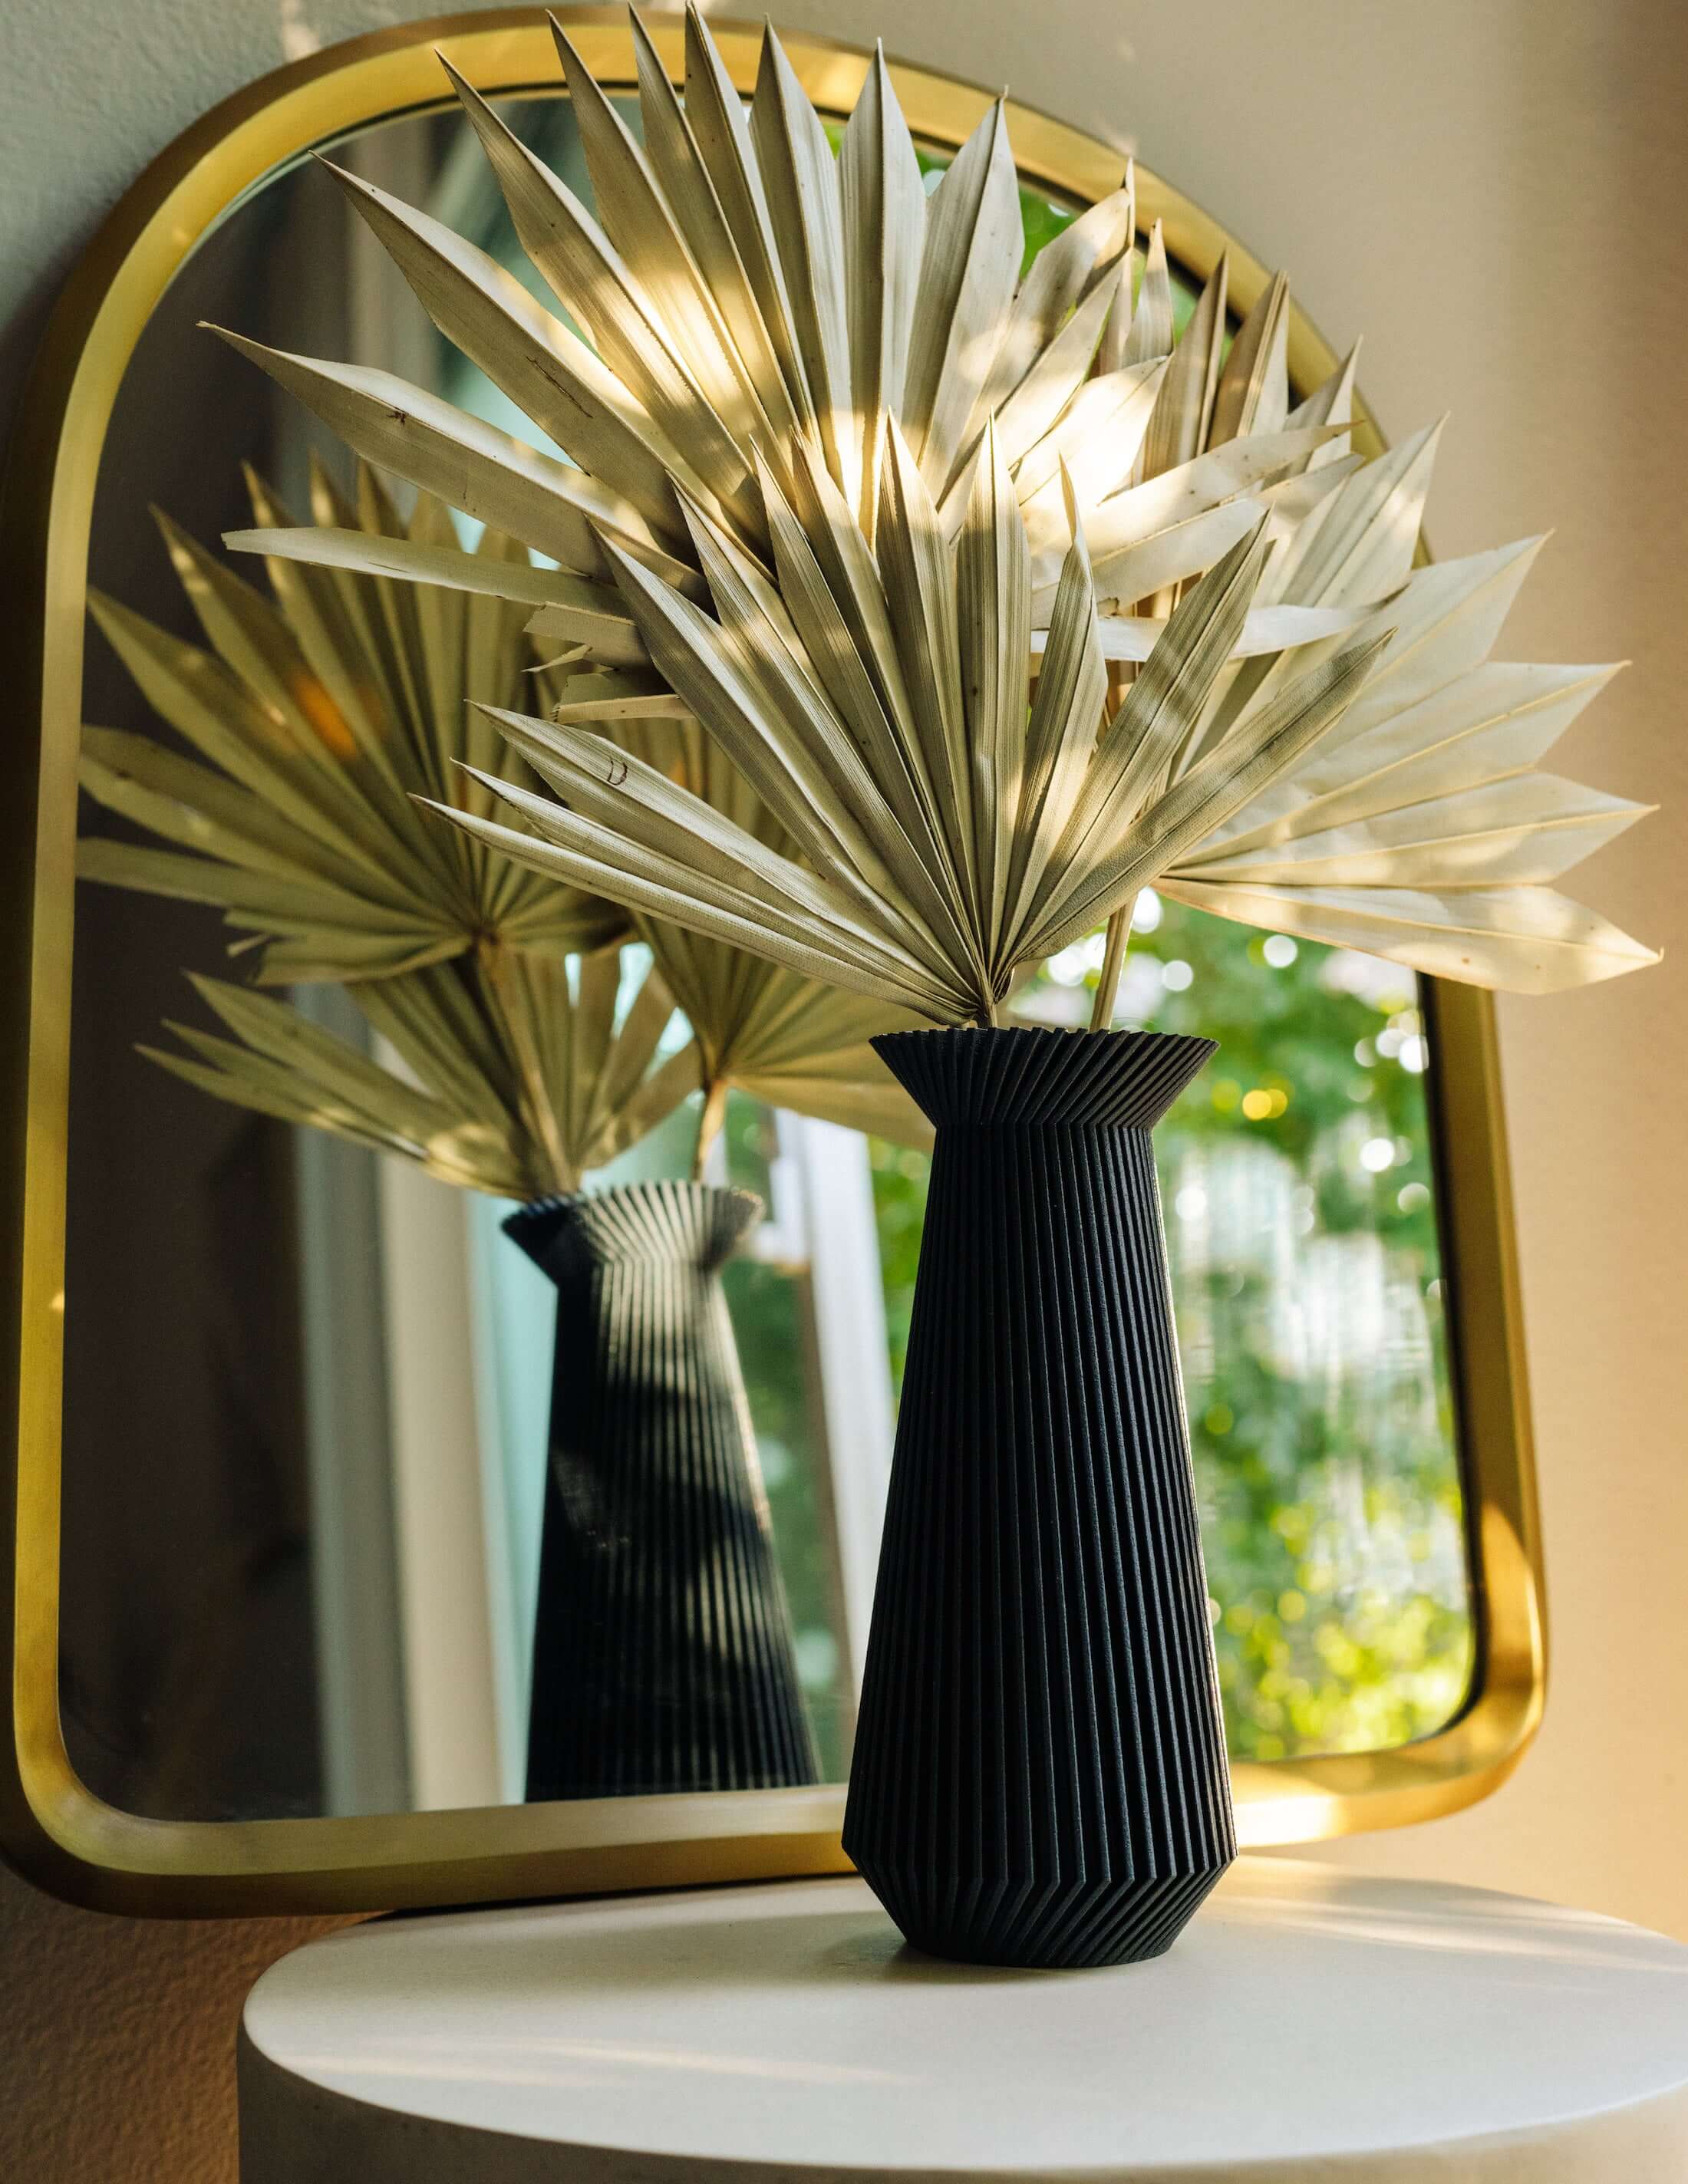 Banda black vase with dried palms.